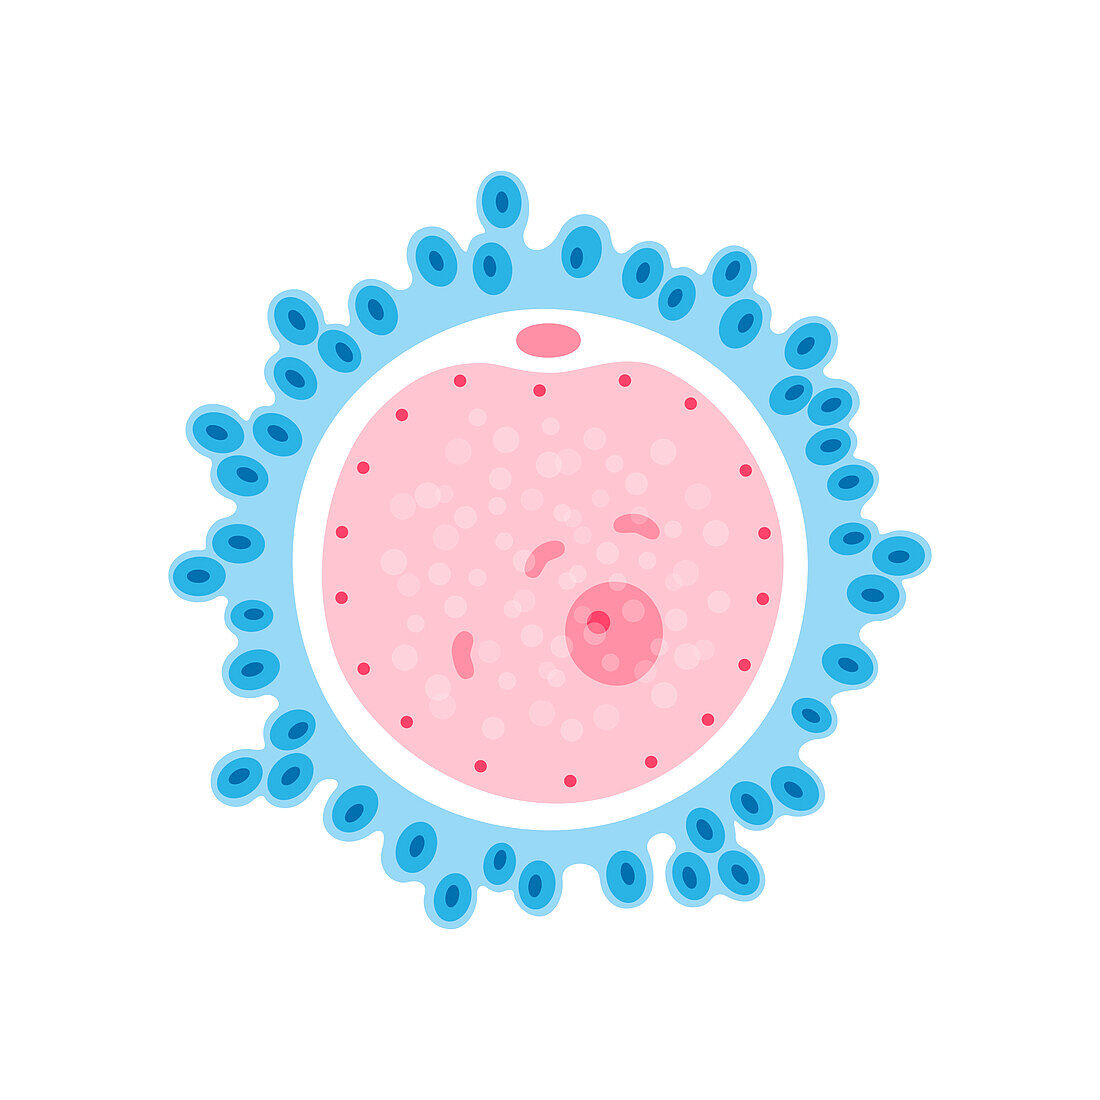 Human egg cell, illustration